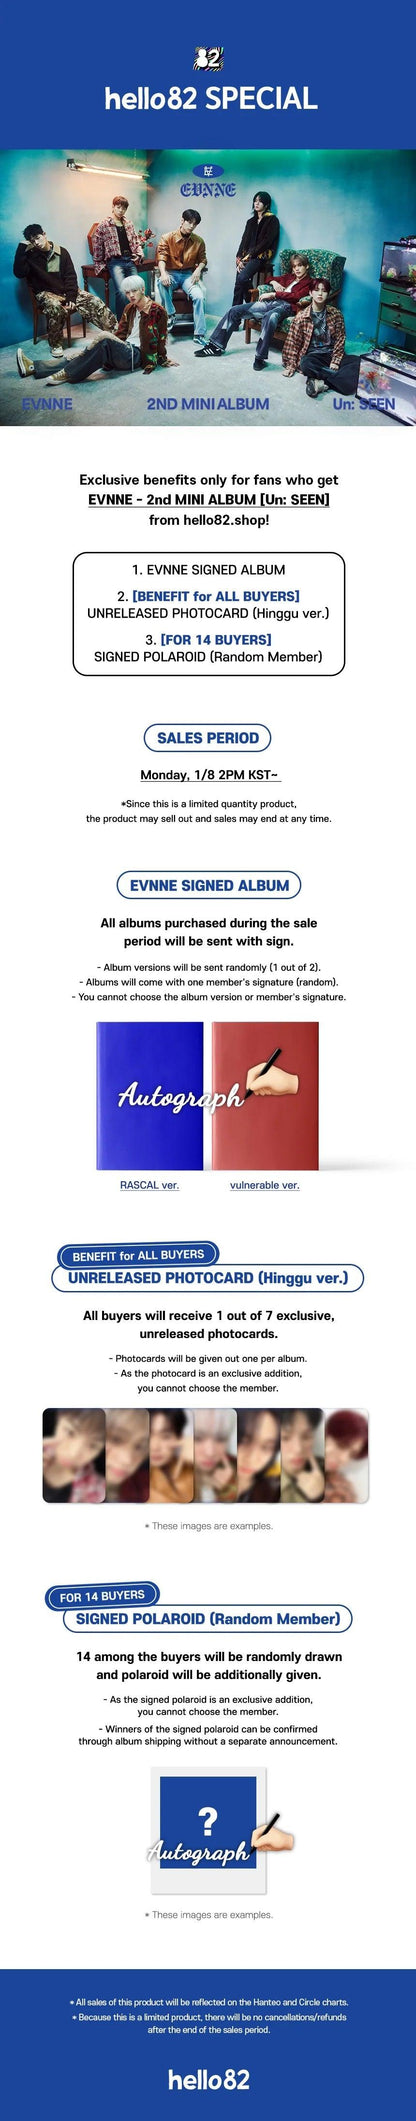 [Signed] EVNNE - 2nd MINI ALBUM [Un: SEEN] (Random) (ALBUM AUTOGRAFIADO) - K-POP WORLD